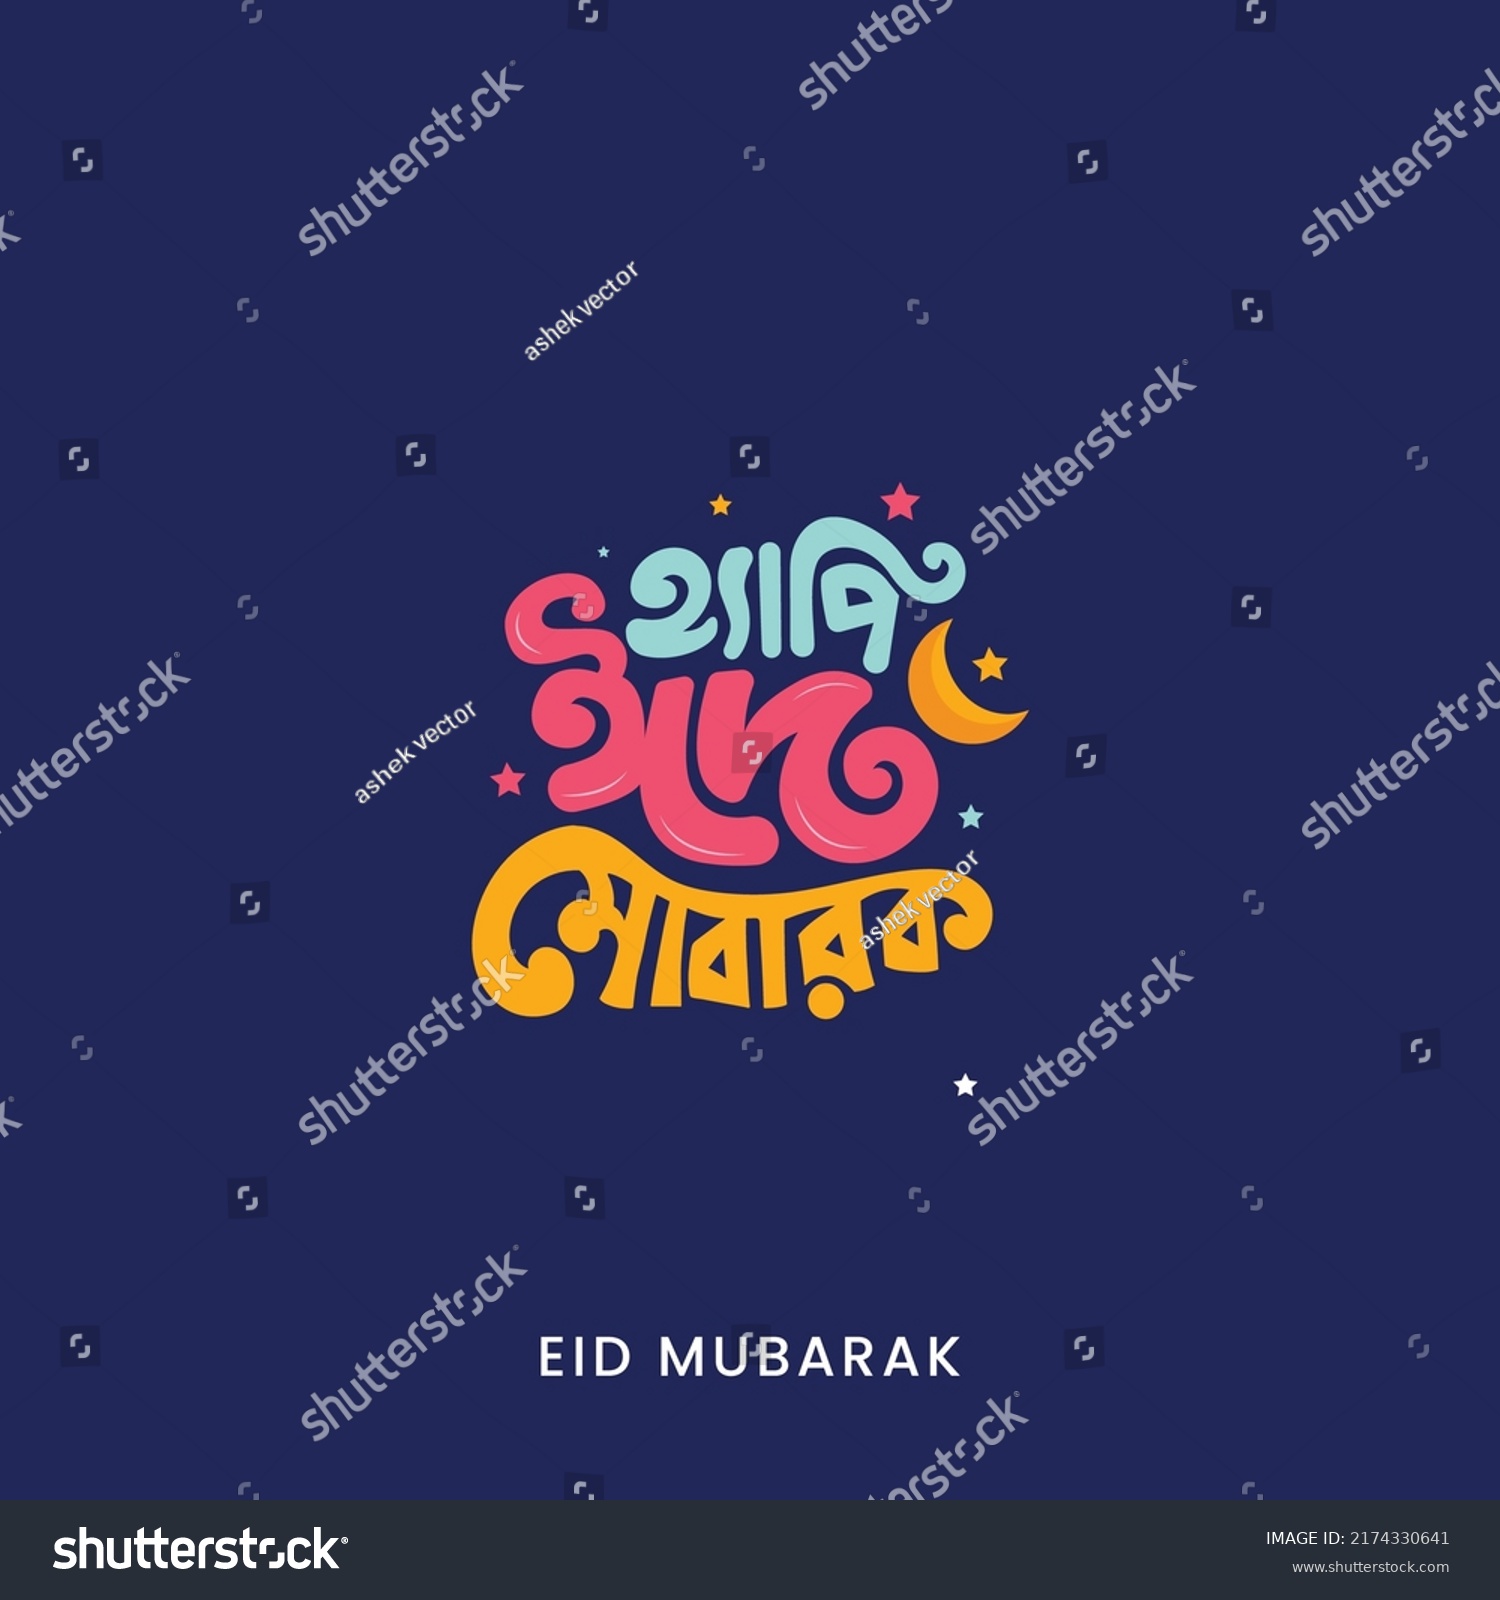 SVG of Eid Mubarak Bangla Typography and Calligraphy blue background. Eid ul-Fitr, Eid ul-Adha. 
Religious holiday celebrated by Muslims worldwide. Creative Idea, Concept Design Eid Mubarak greeting card.
 svg